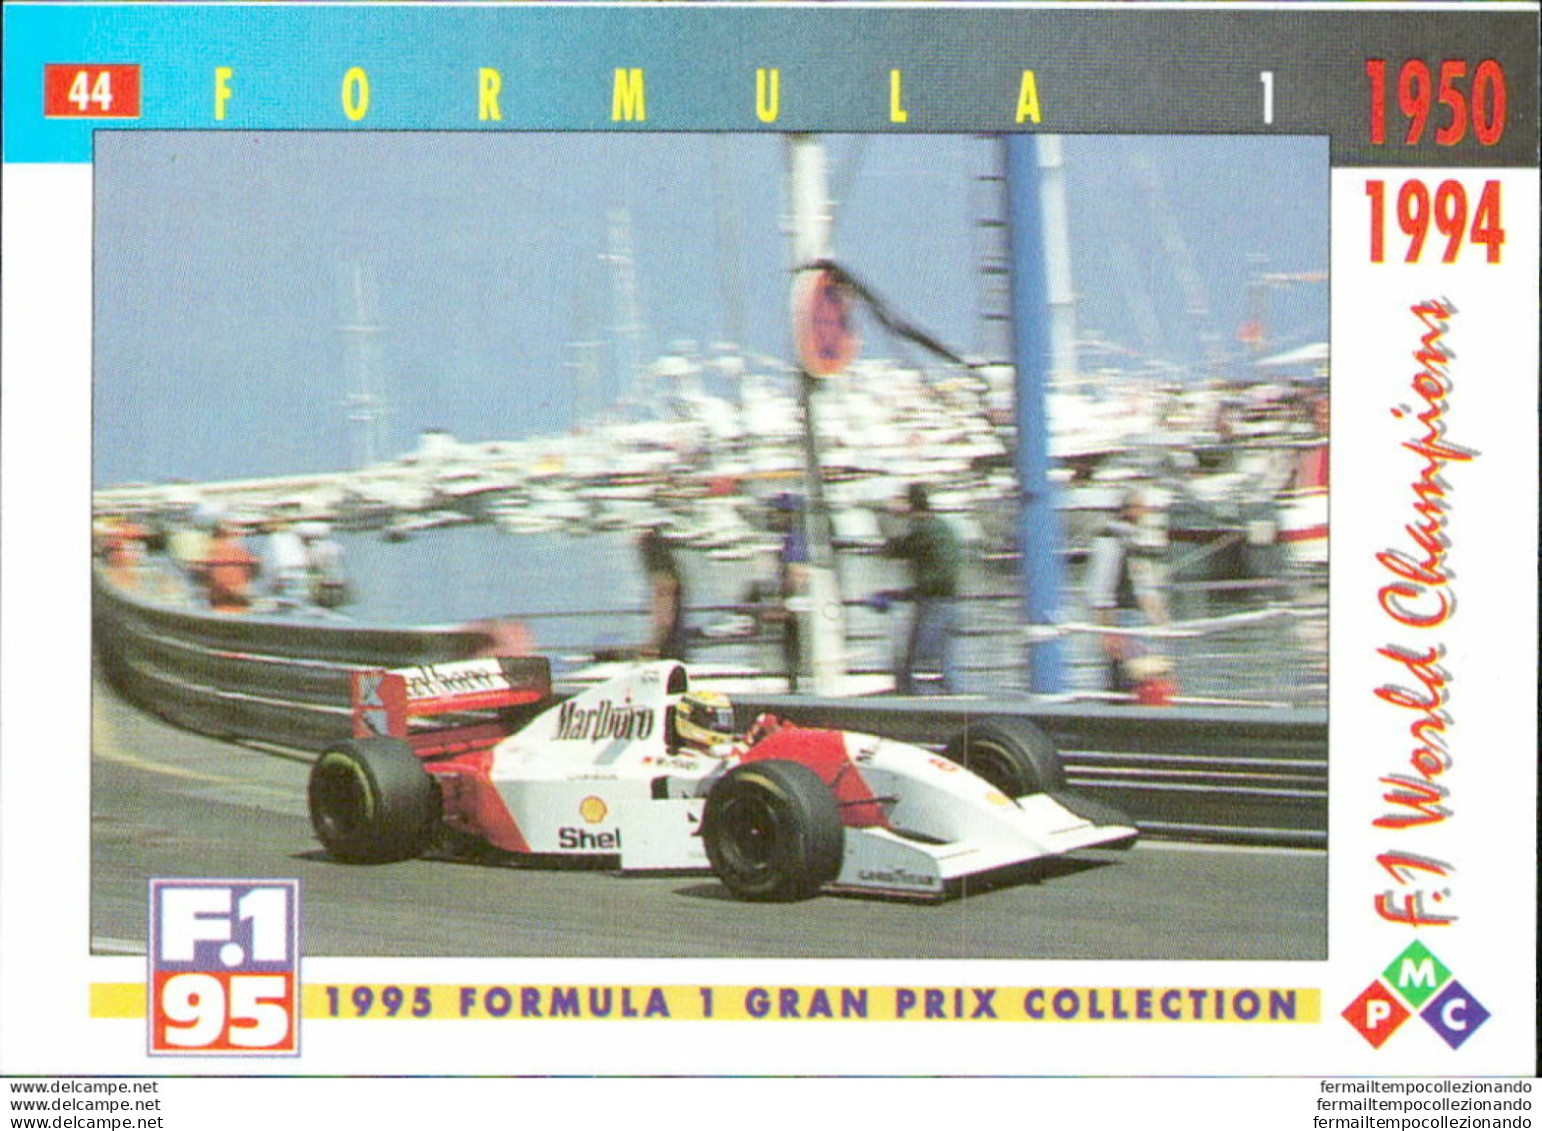 Bh44 1995 Formula 1 Gran Prix Collection Card F.1 World Champions N 44 - Catalogues